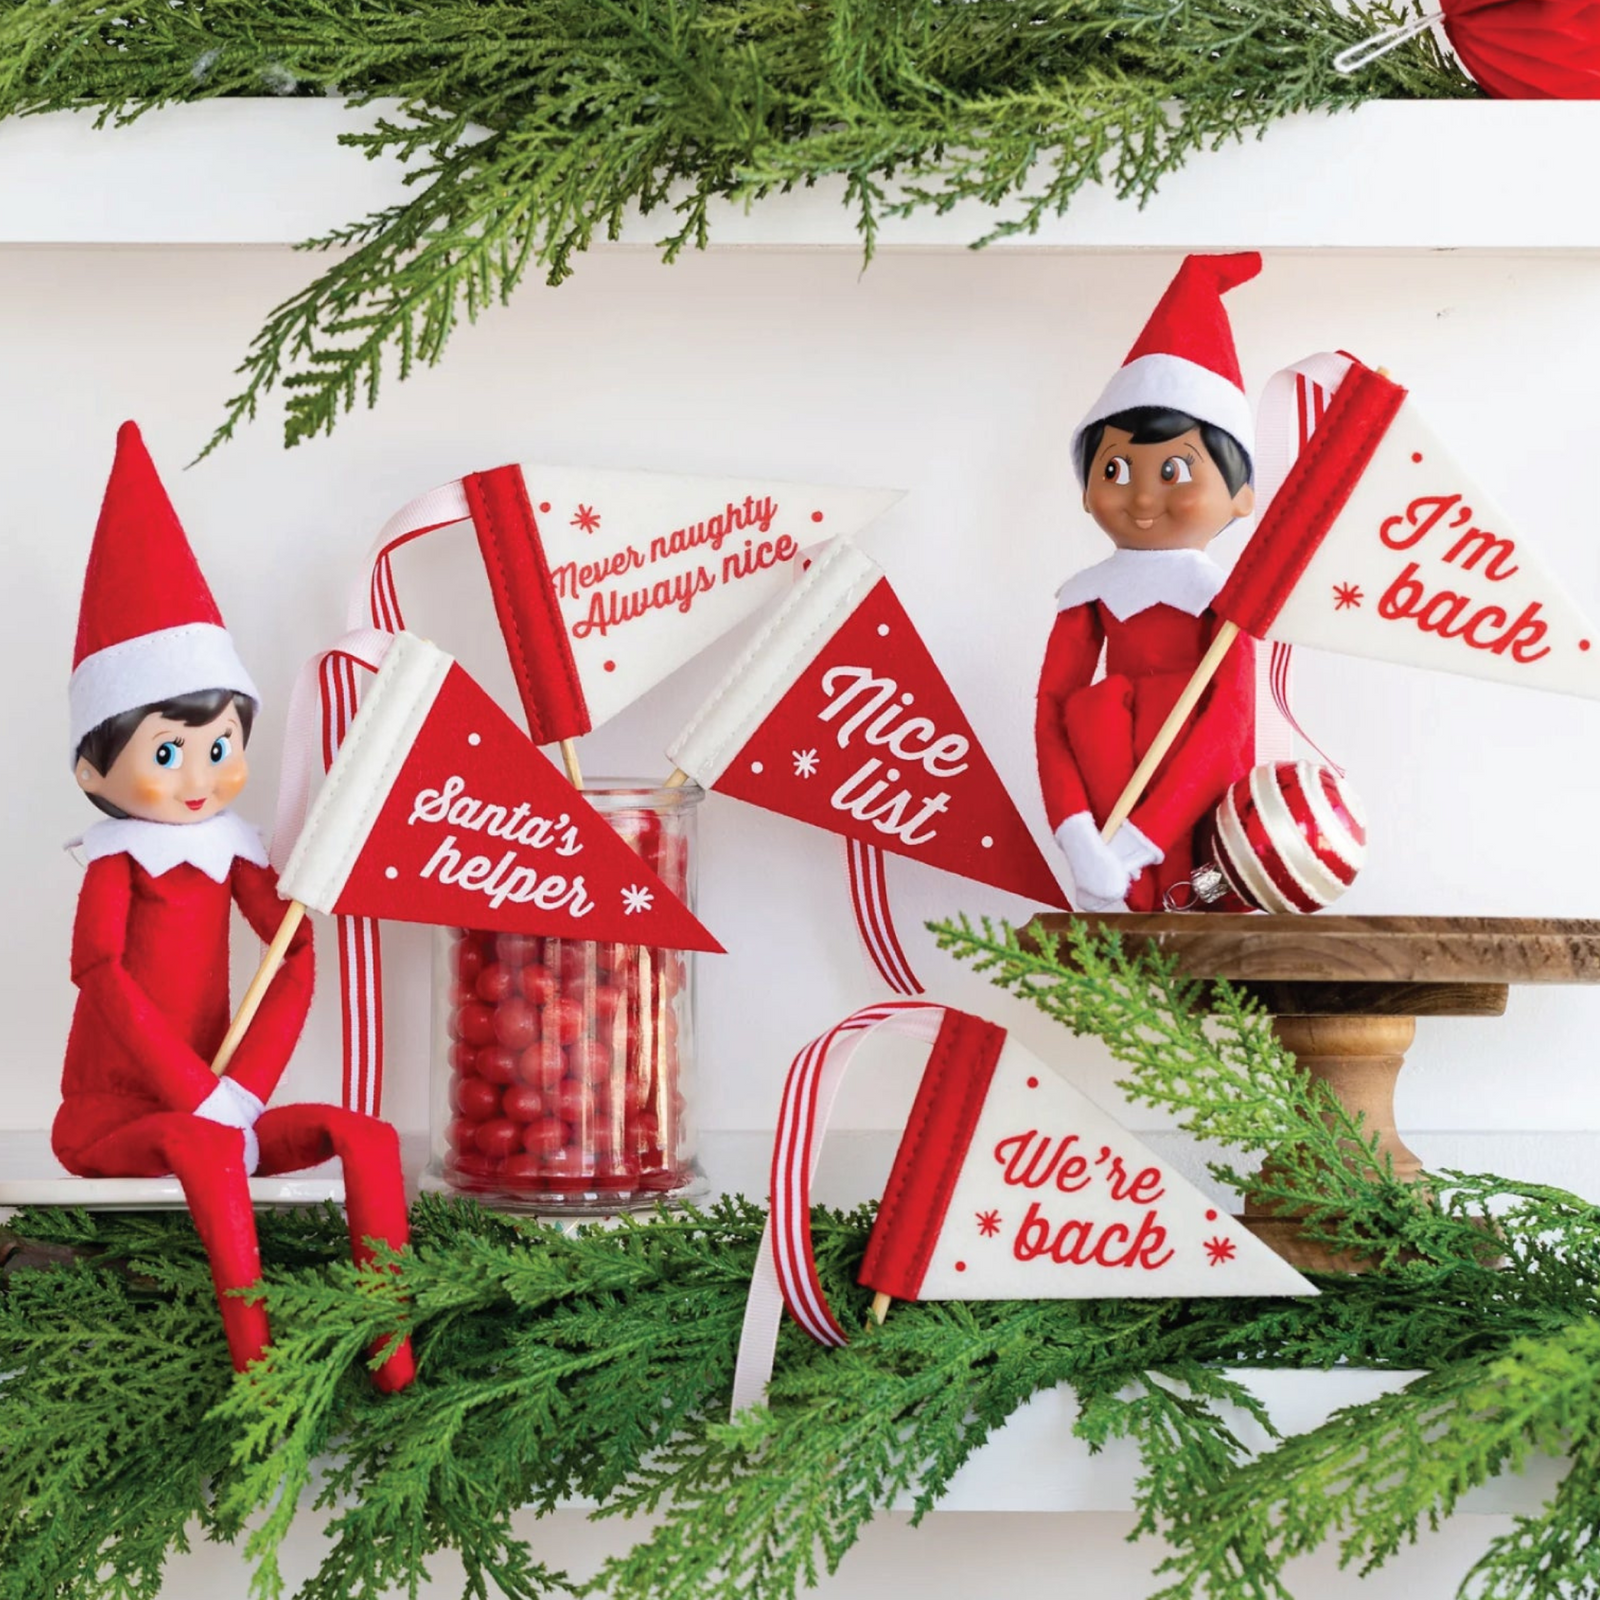 American Greetings Christmas Party Supplies, Santa and Snowman 16